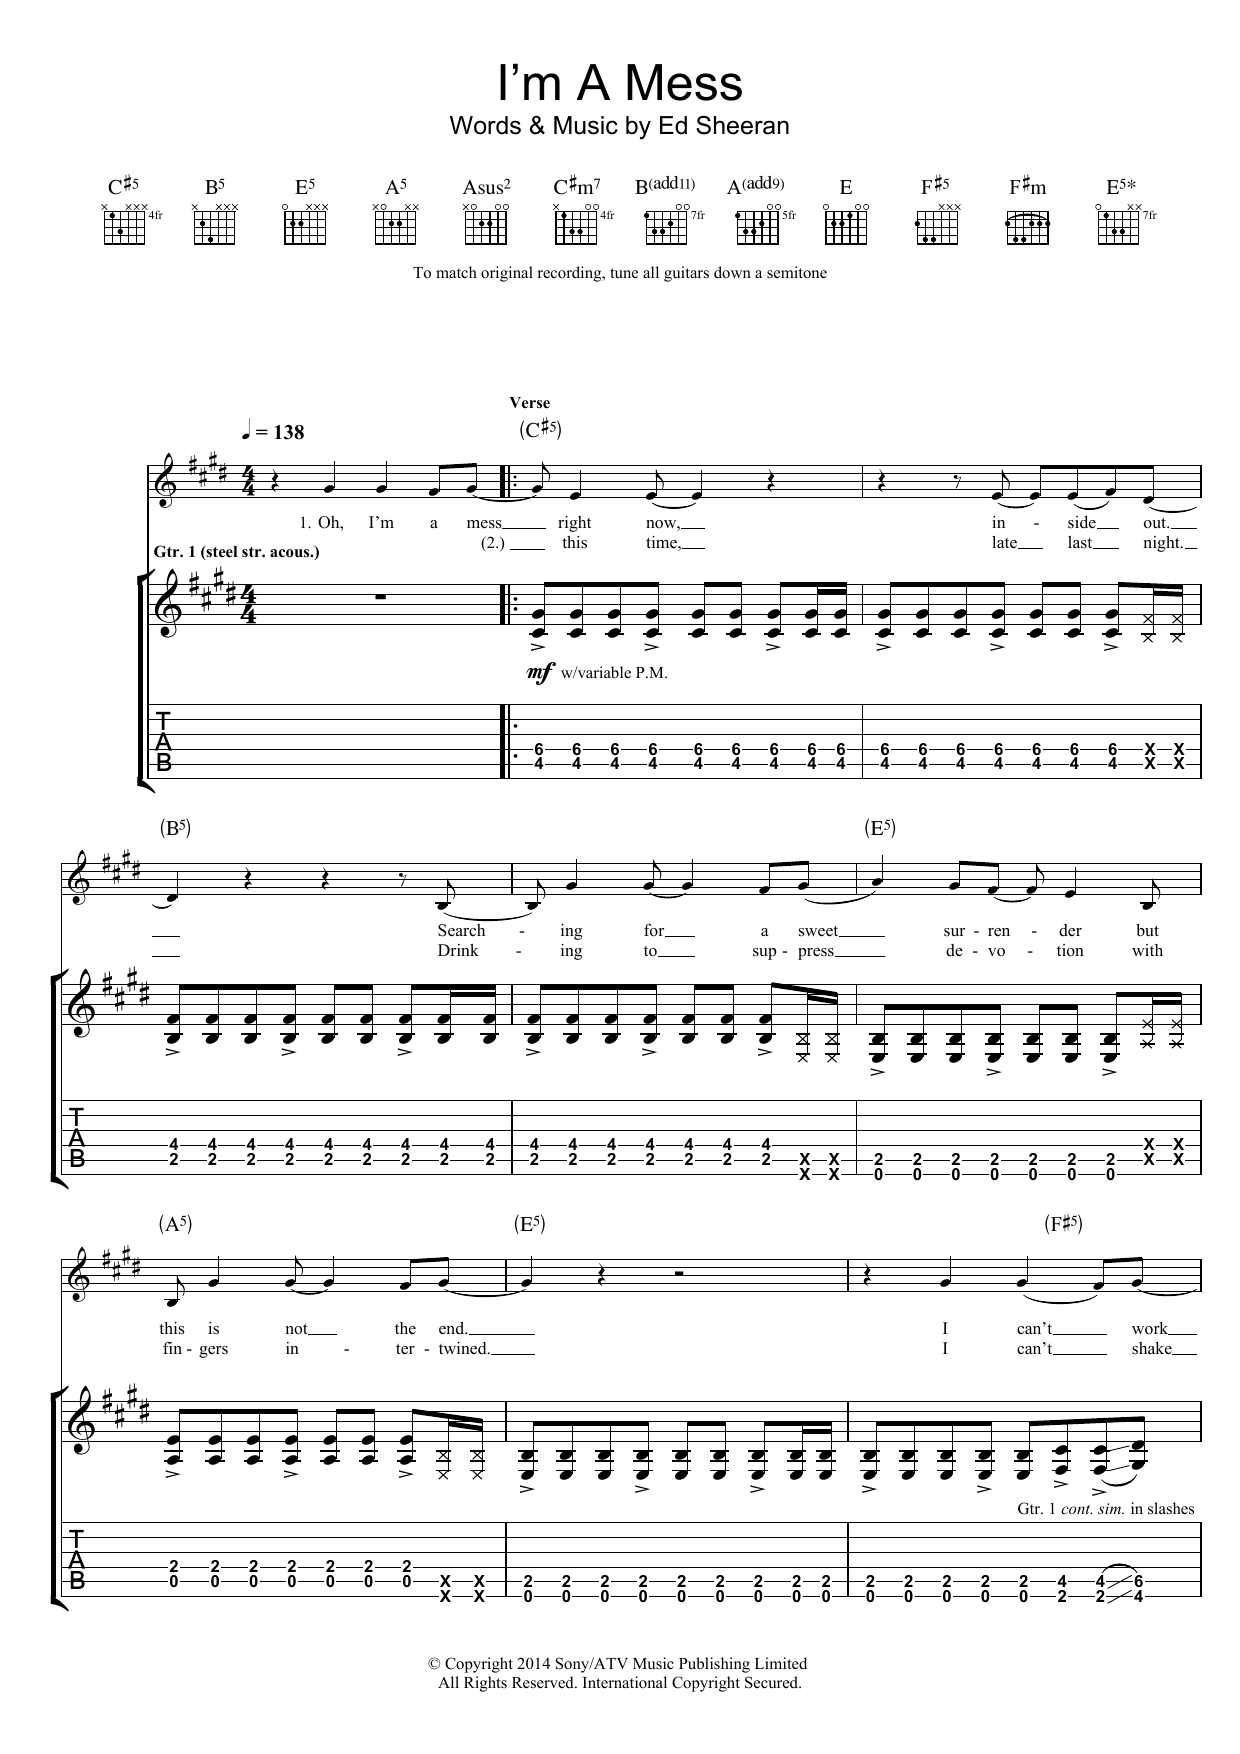 Ed Sheeran I'm A Mess Sheet Music Notes & Chords for Piano, Vocal & Guitar (Right-Hand Melody) - Download or Print PDF